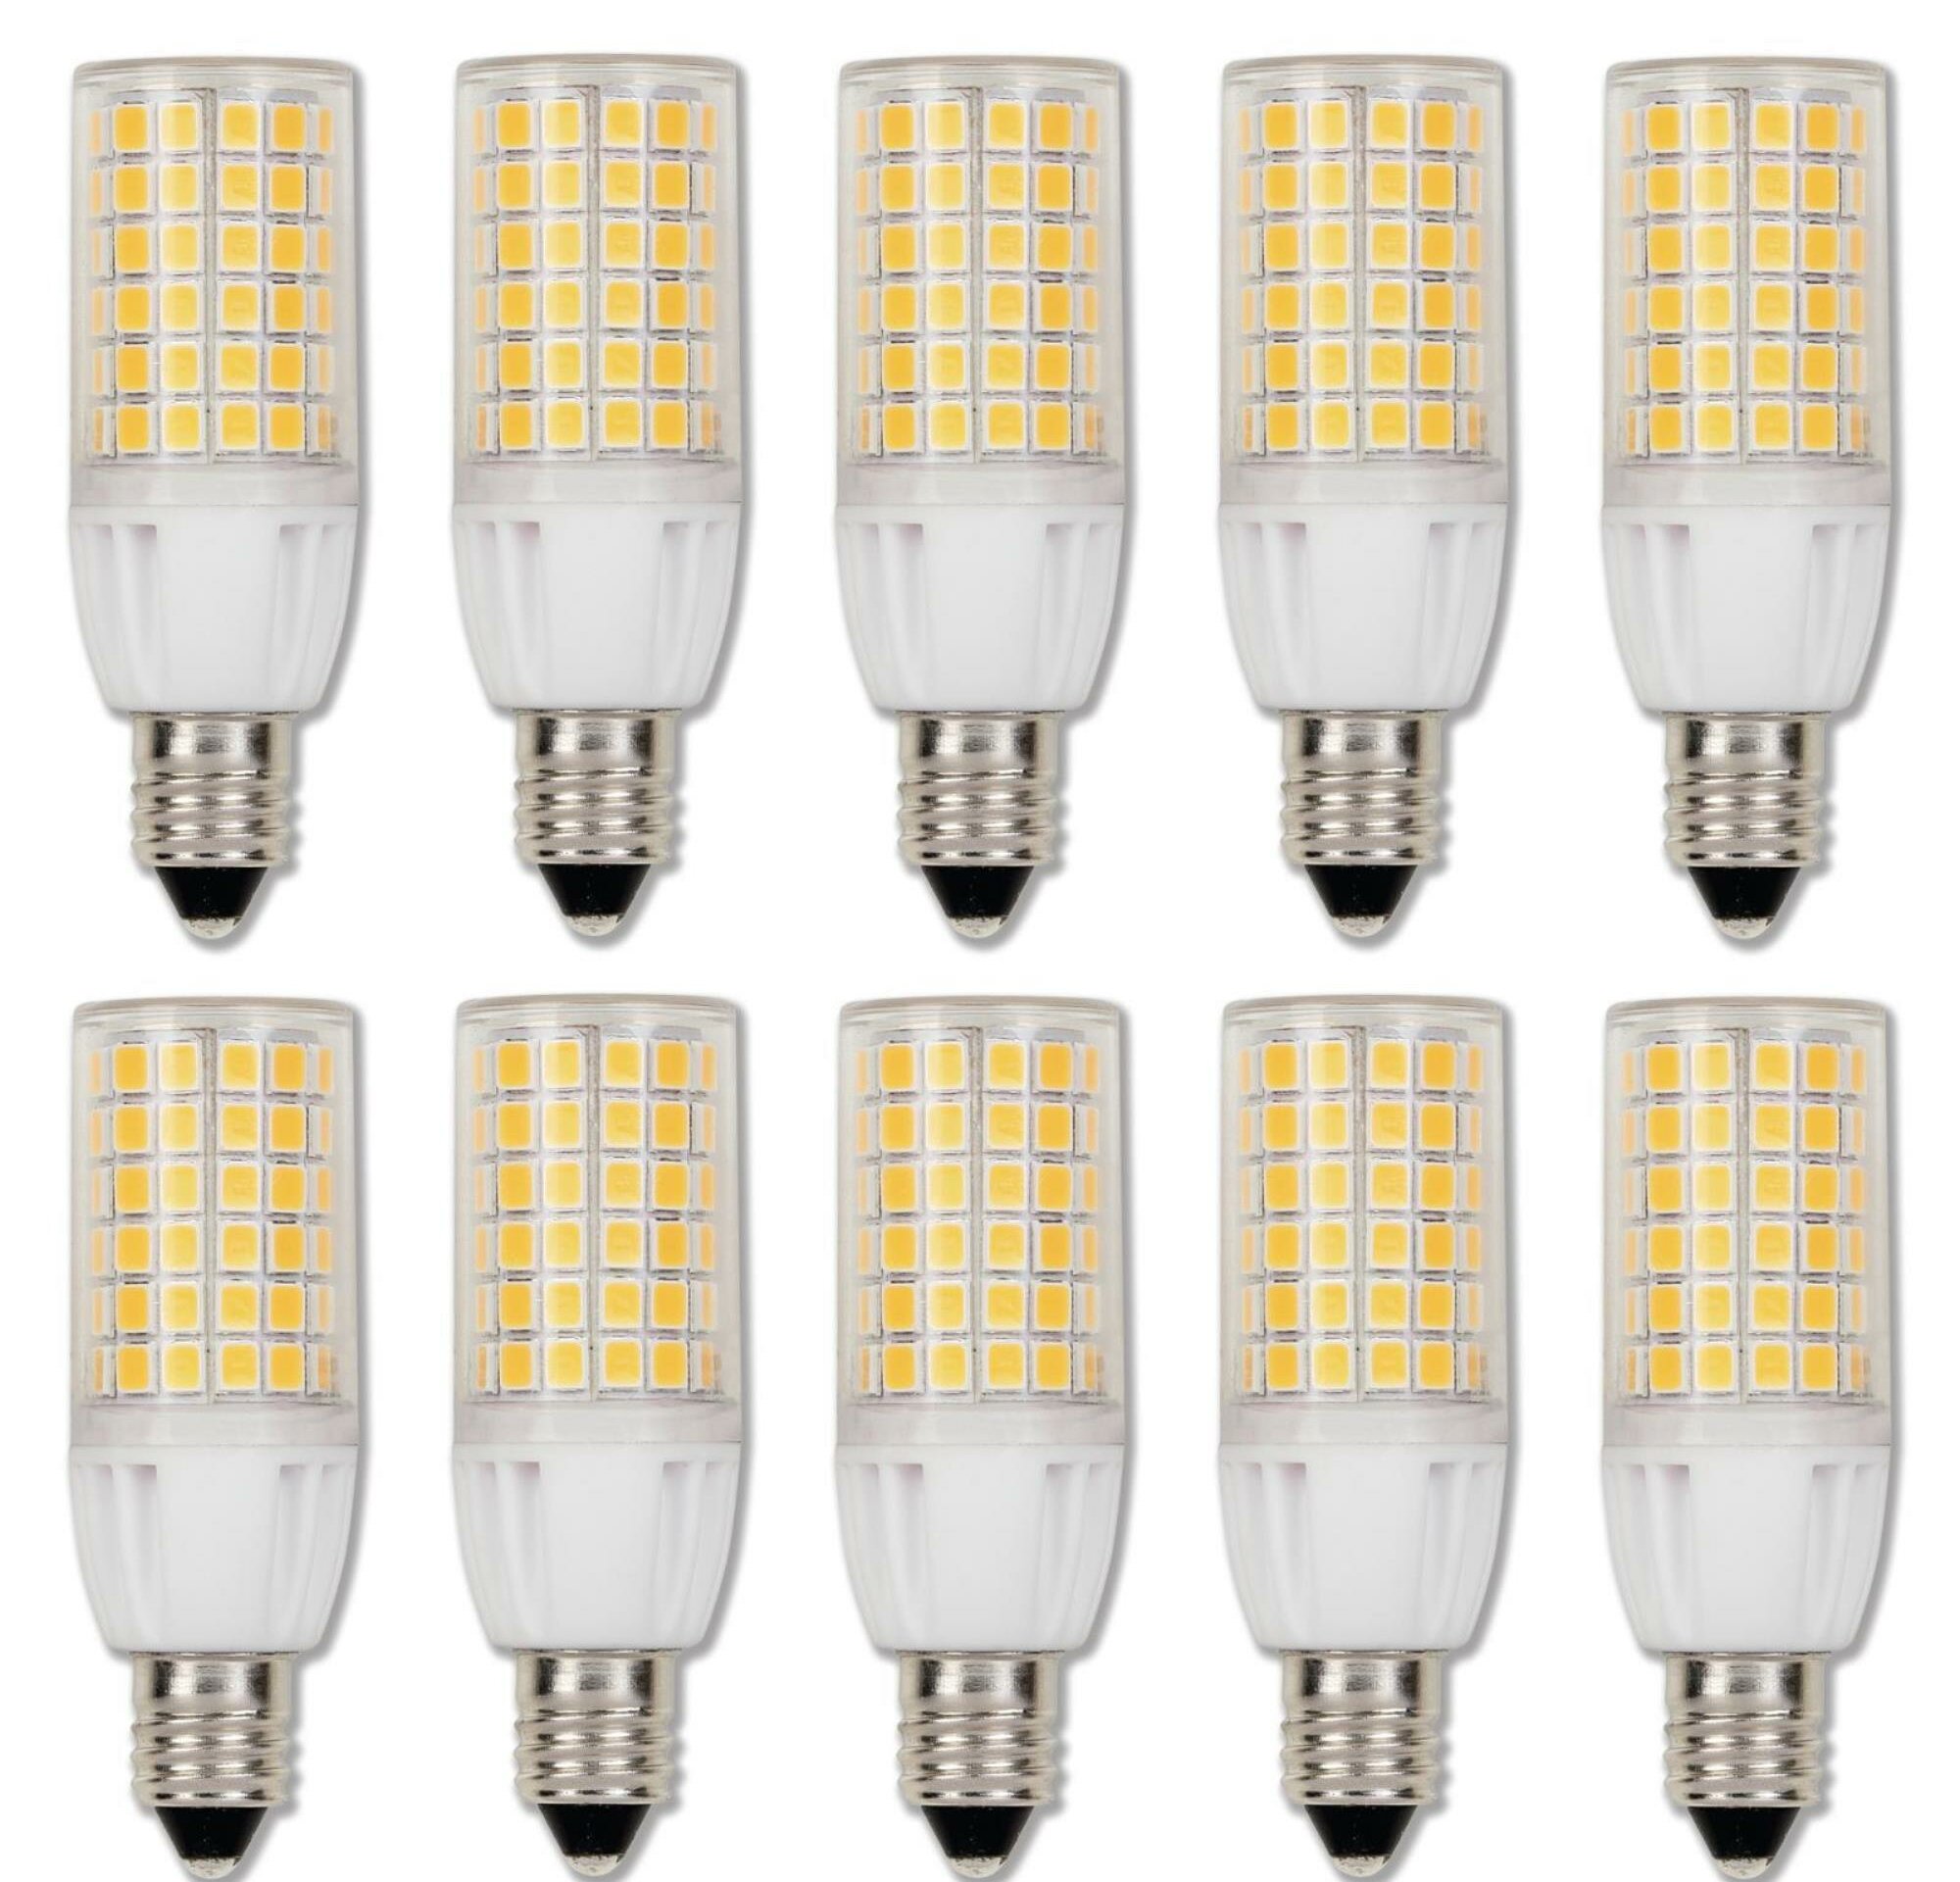 10W LED Bulb G9 E11 E12 E14 E17 BA15D 110V 102-2835 SMD Ceramic Light White/Warm 